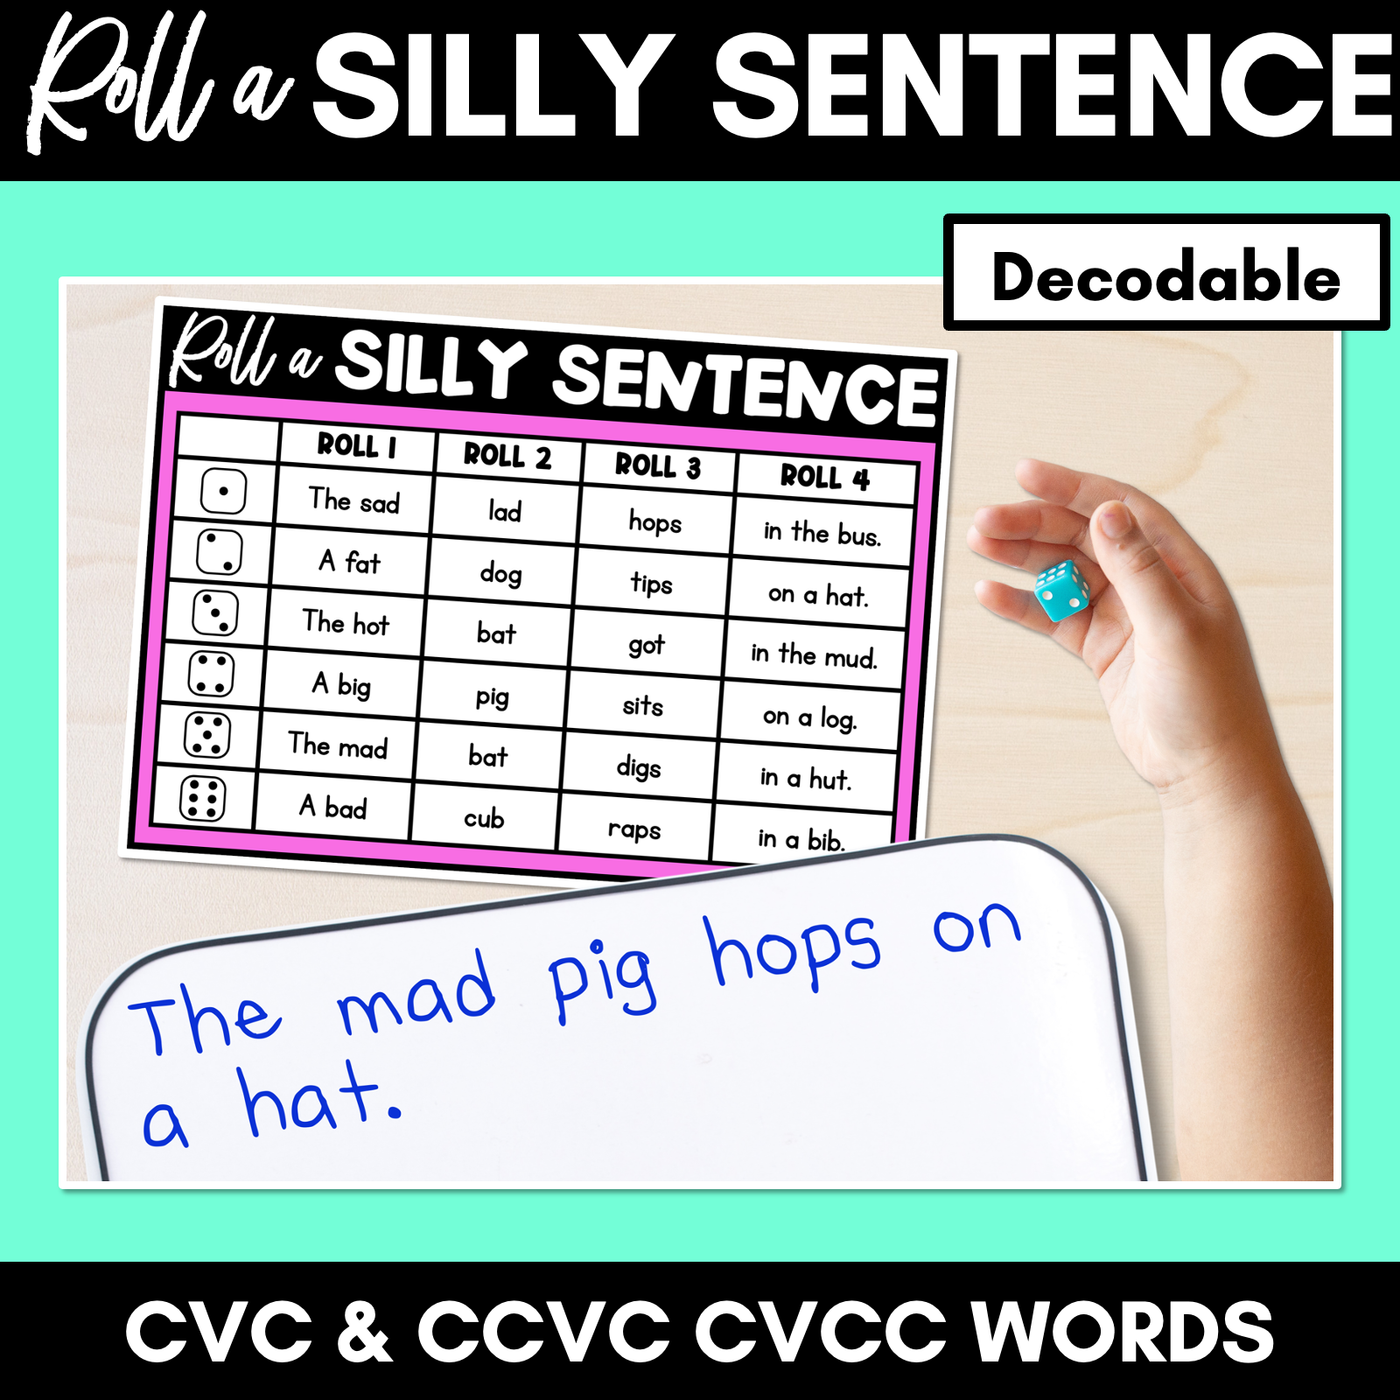 Decodable Sentences with CVC CVCC CCVC Words - Roll a Silly Sentence Phonics